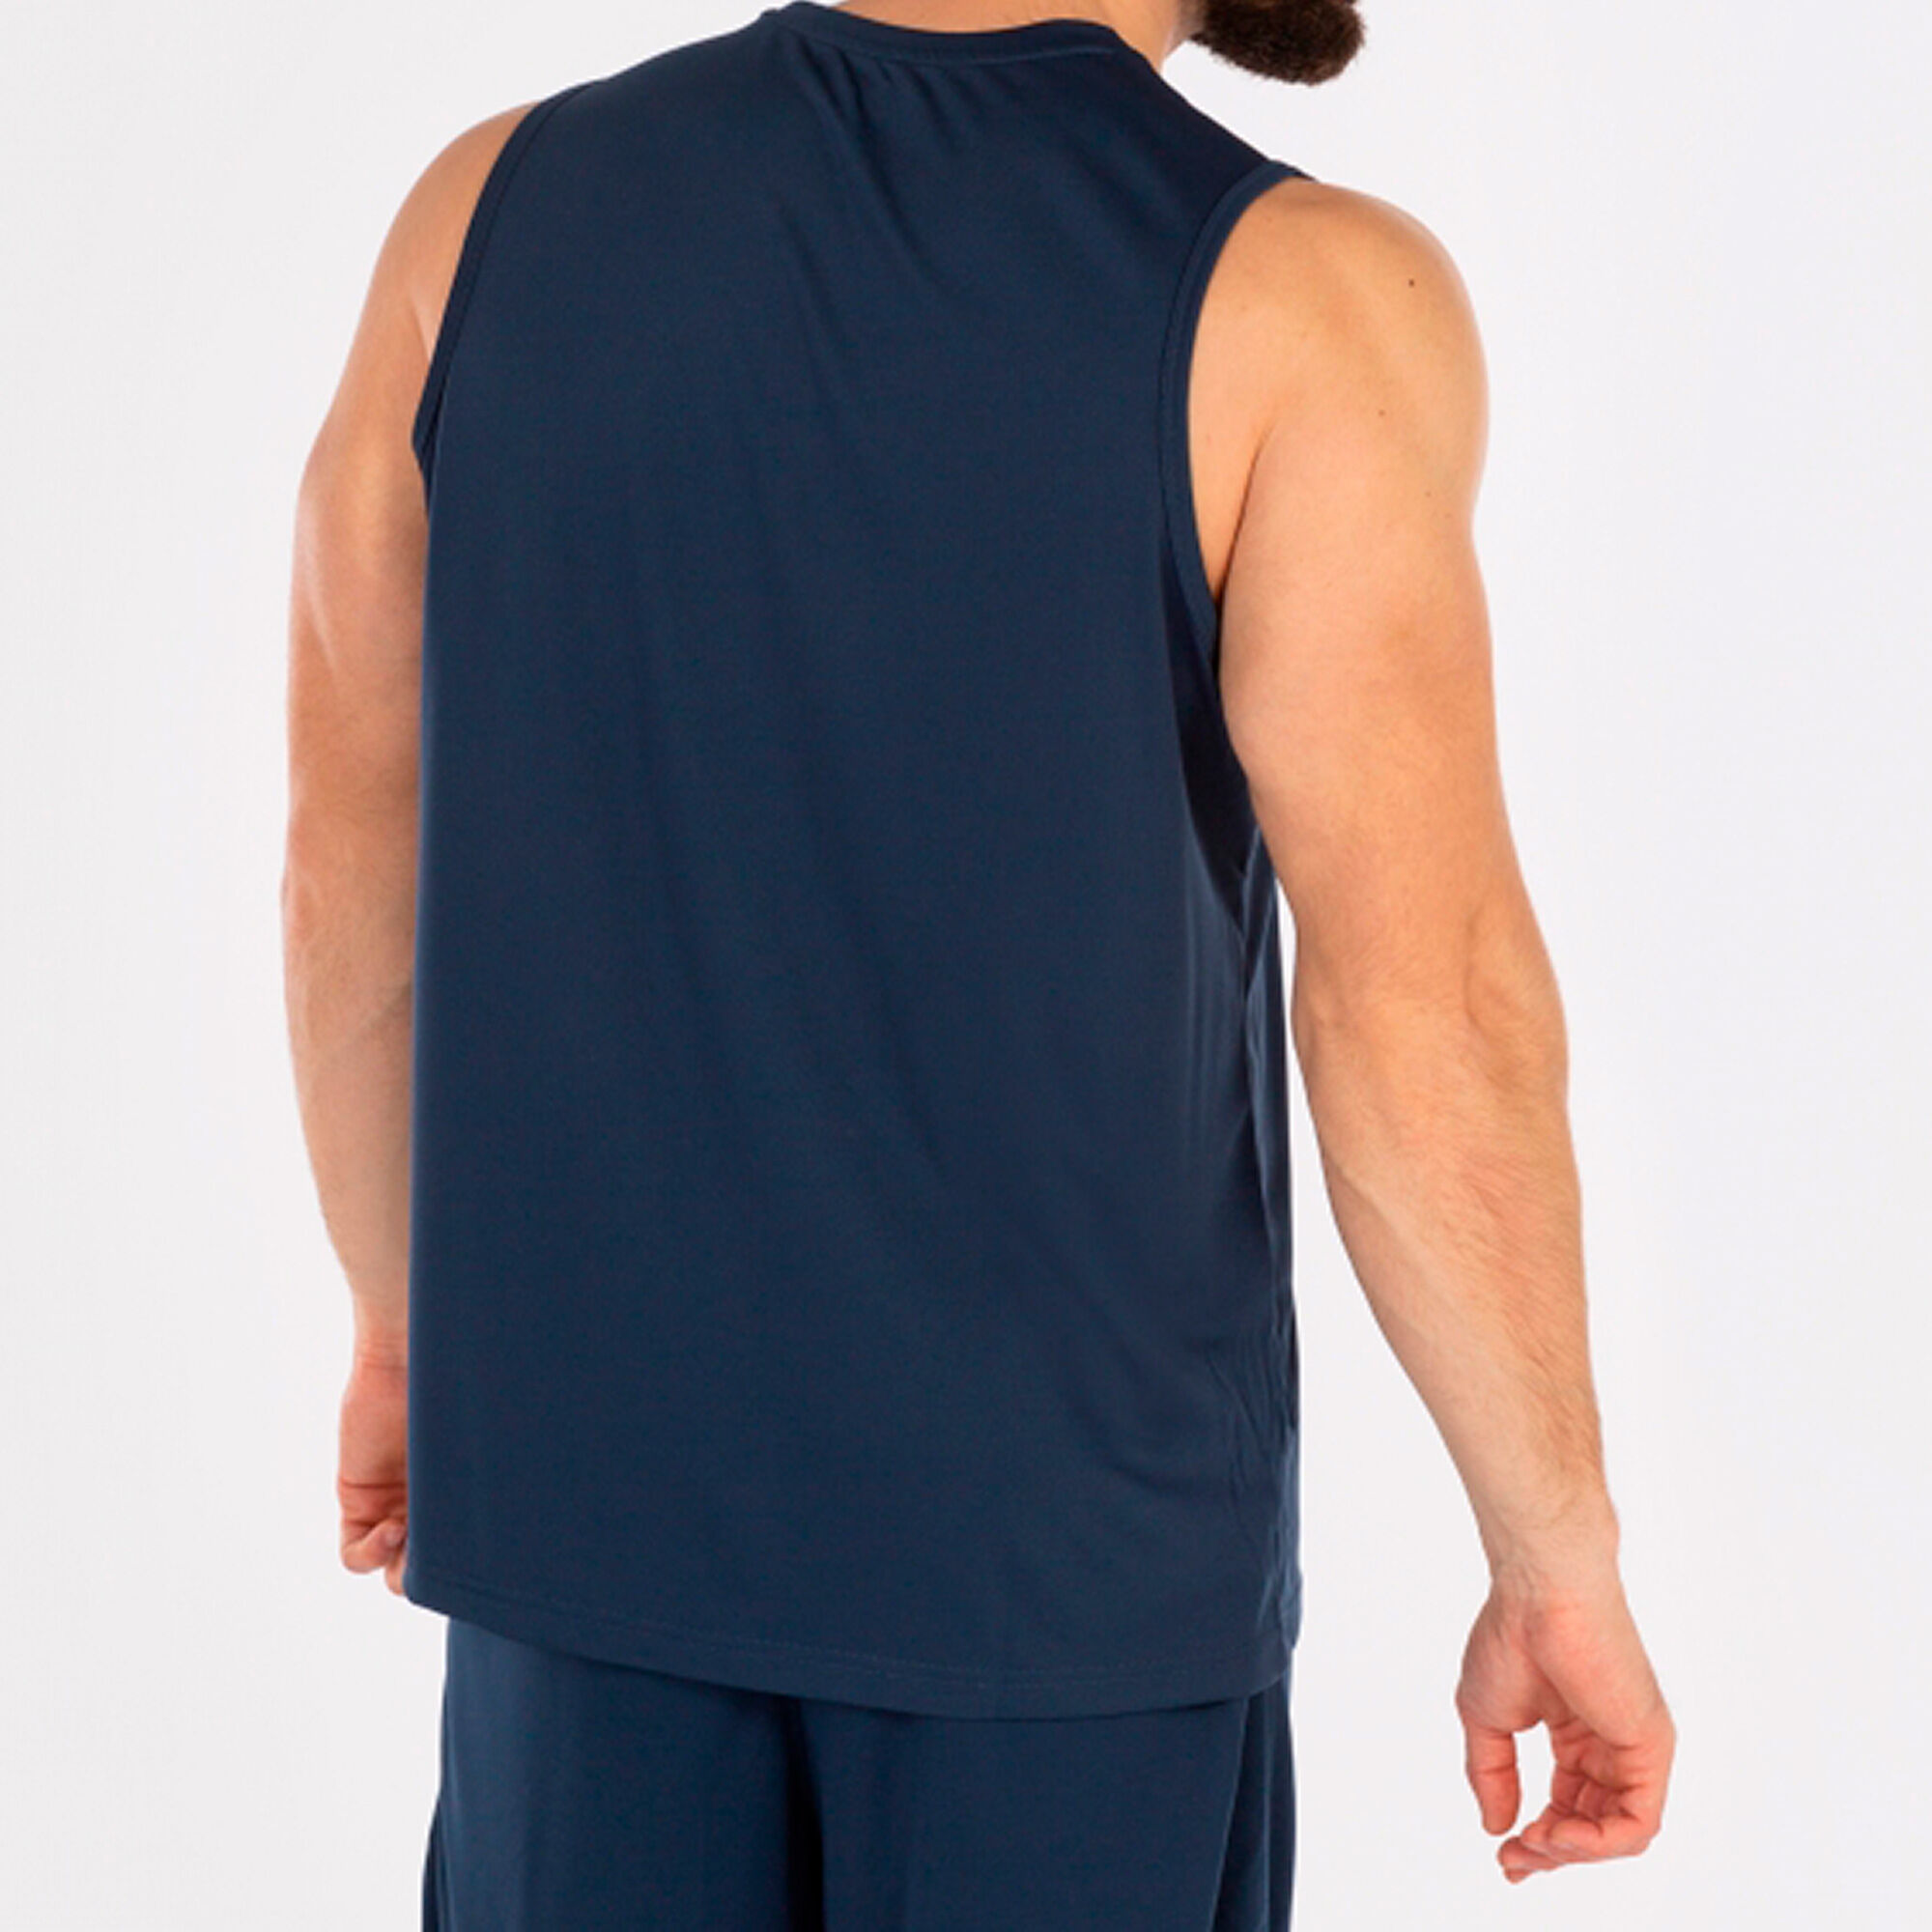 Camiseta sin mangas hombre Combi Basket marino